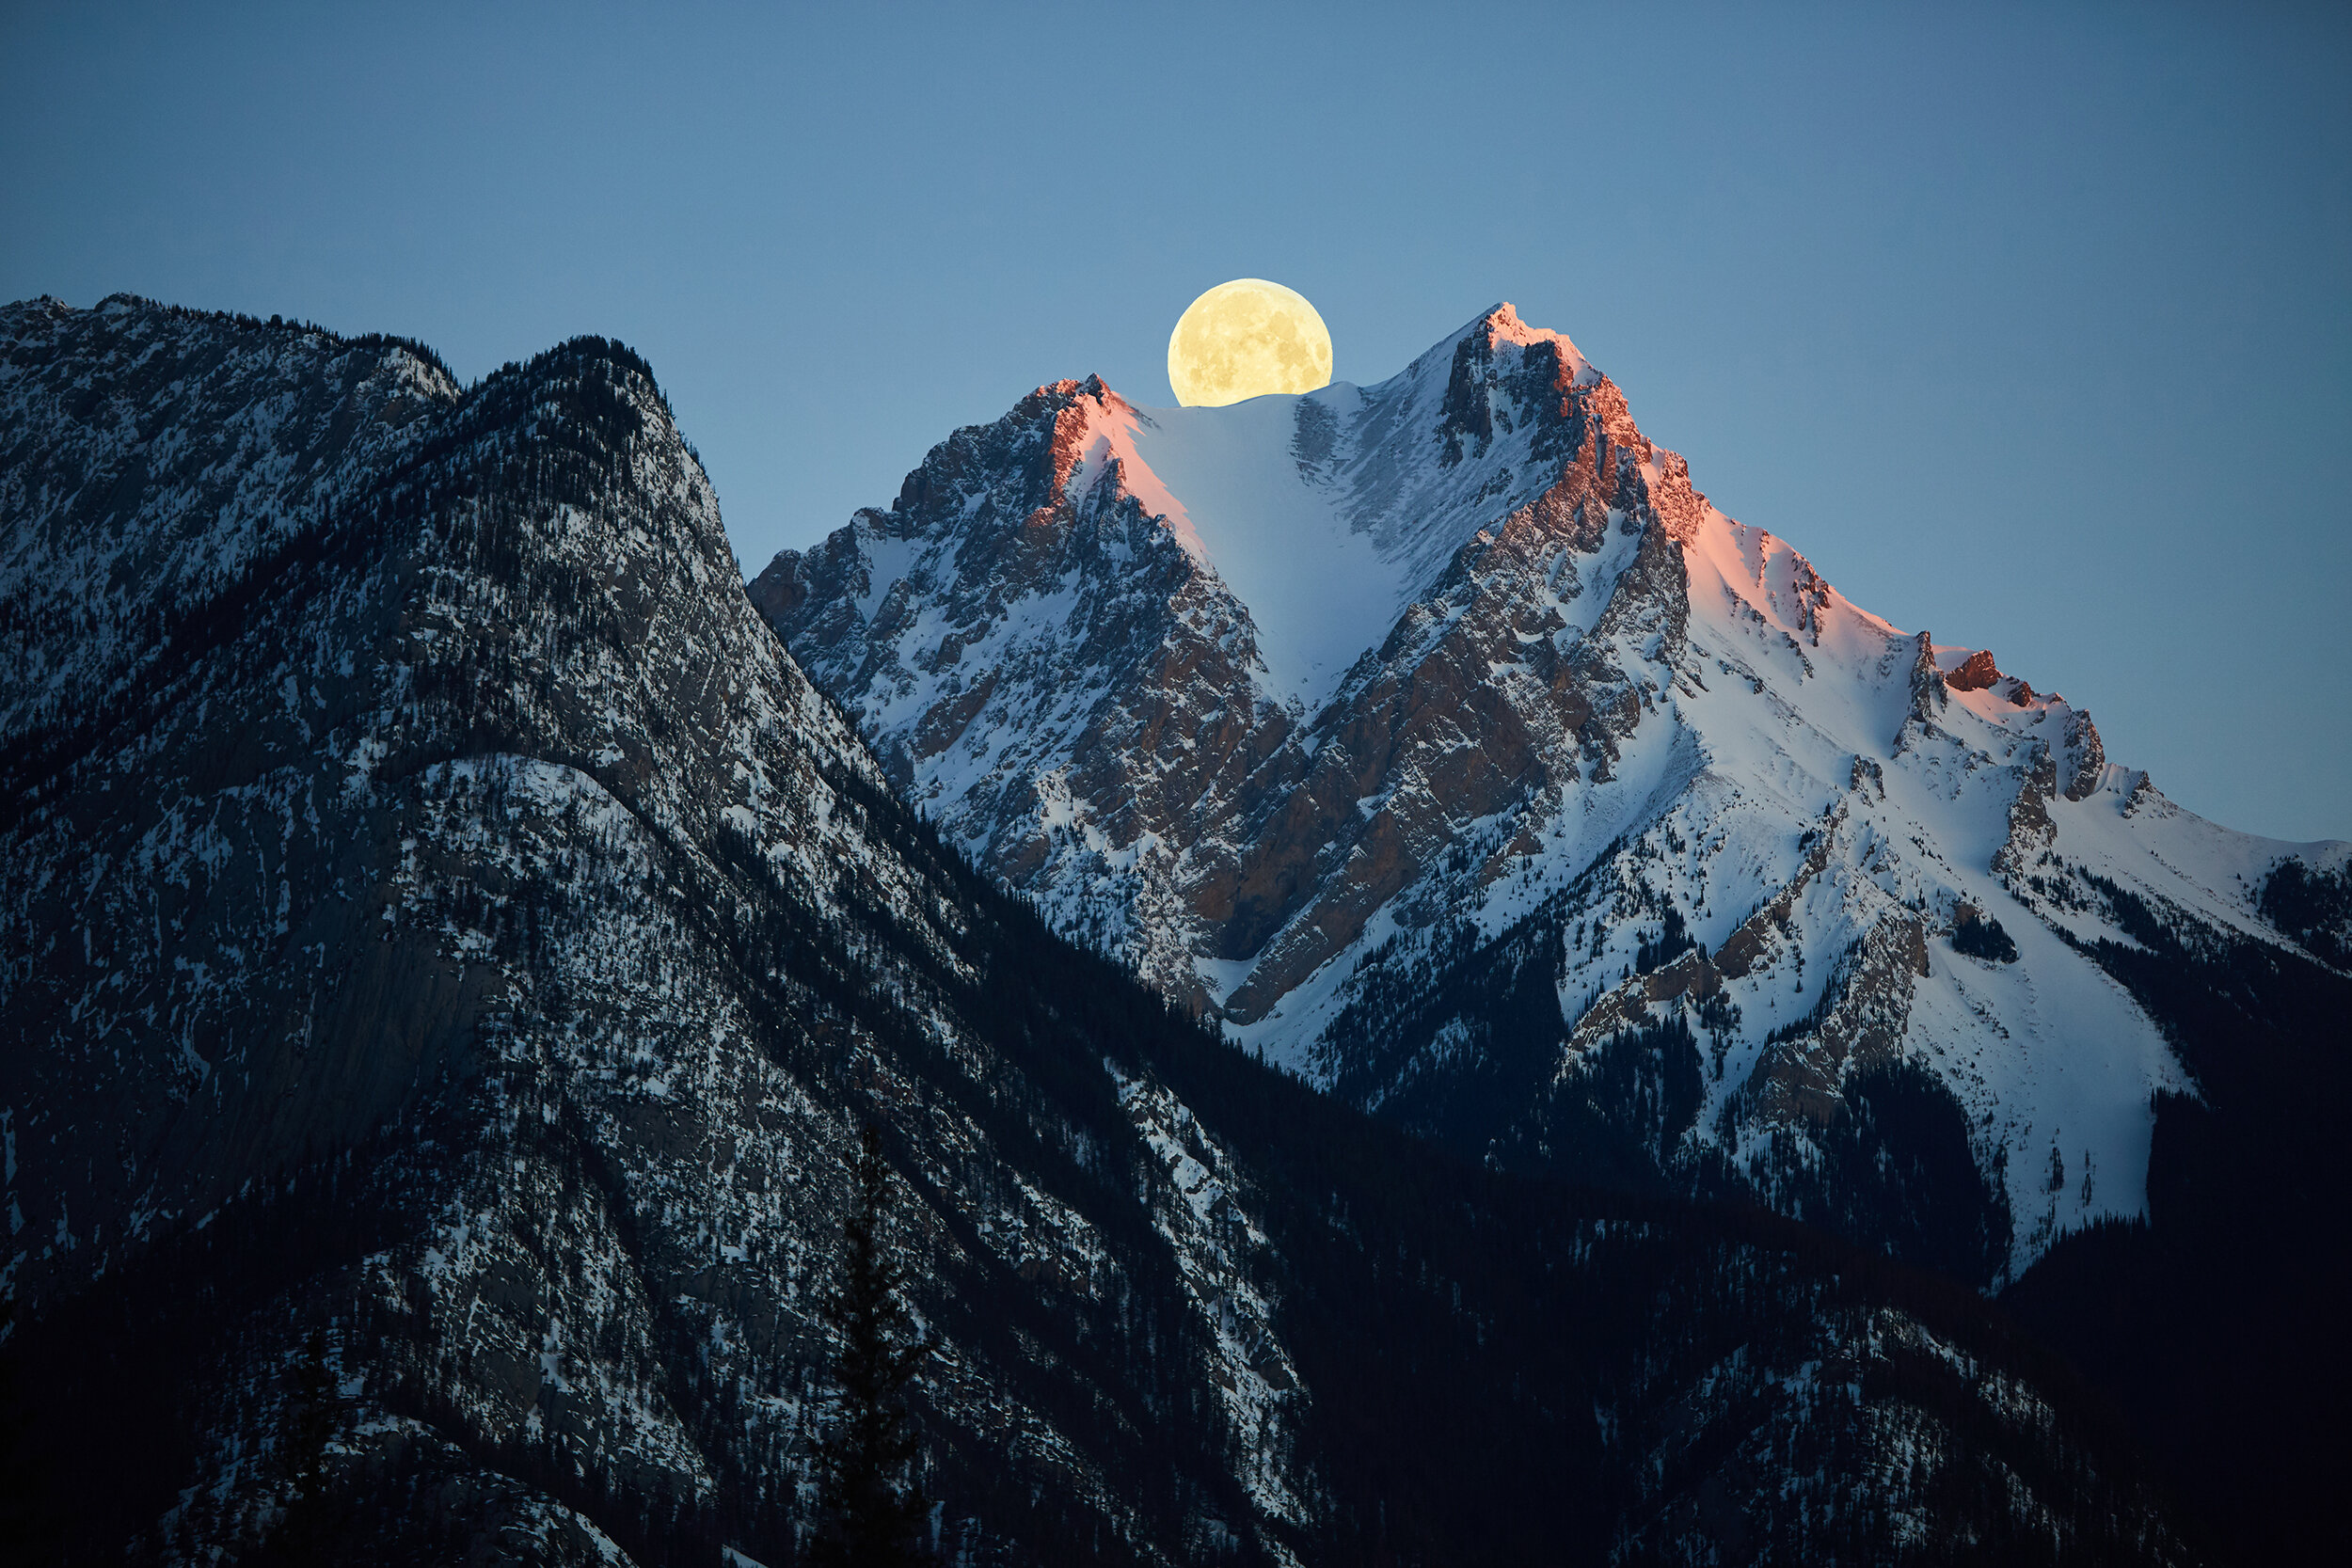 gargoyle mountain moon rise.jpg